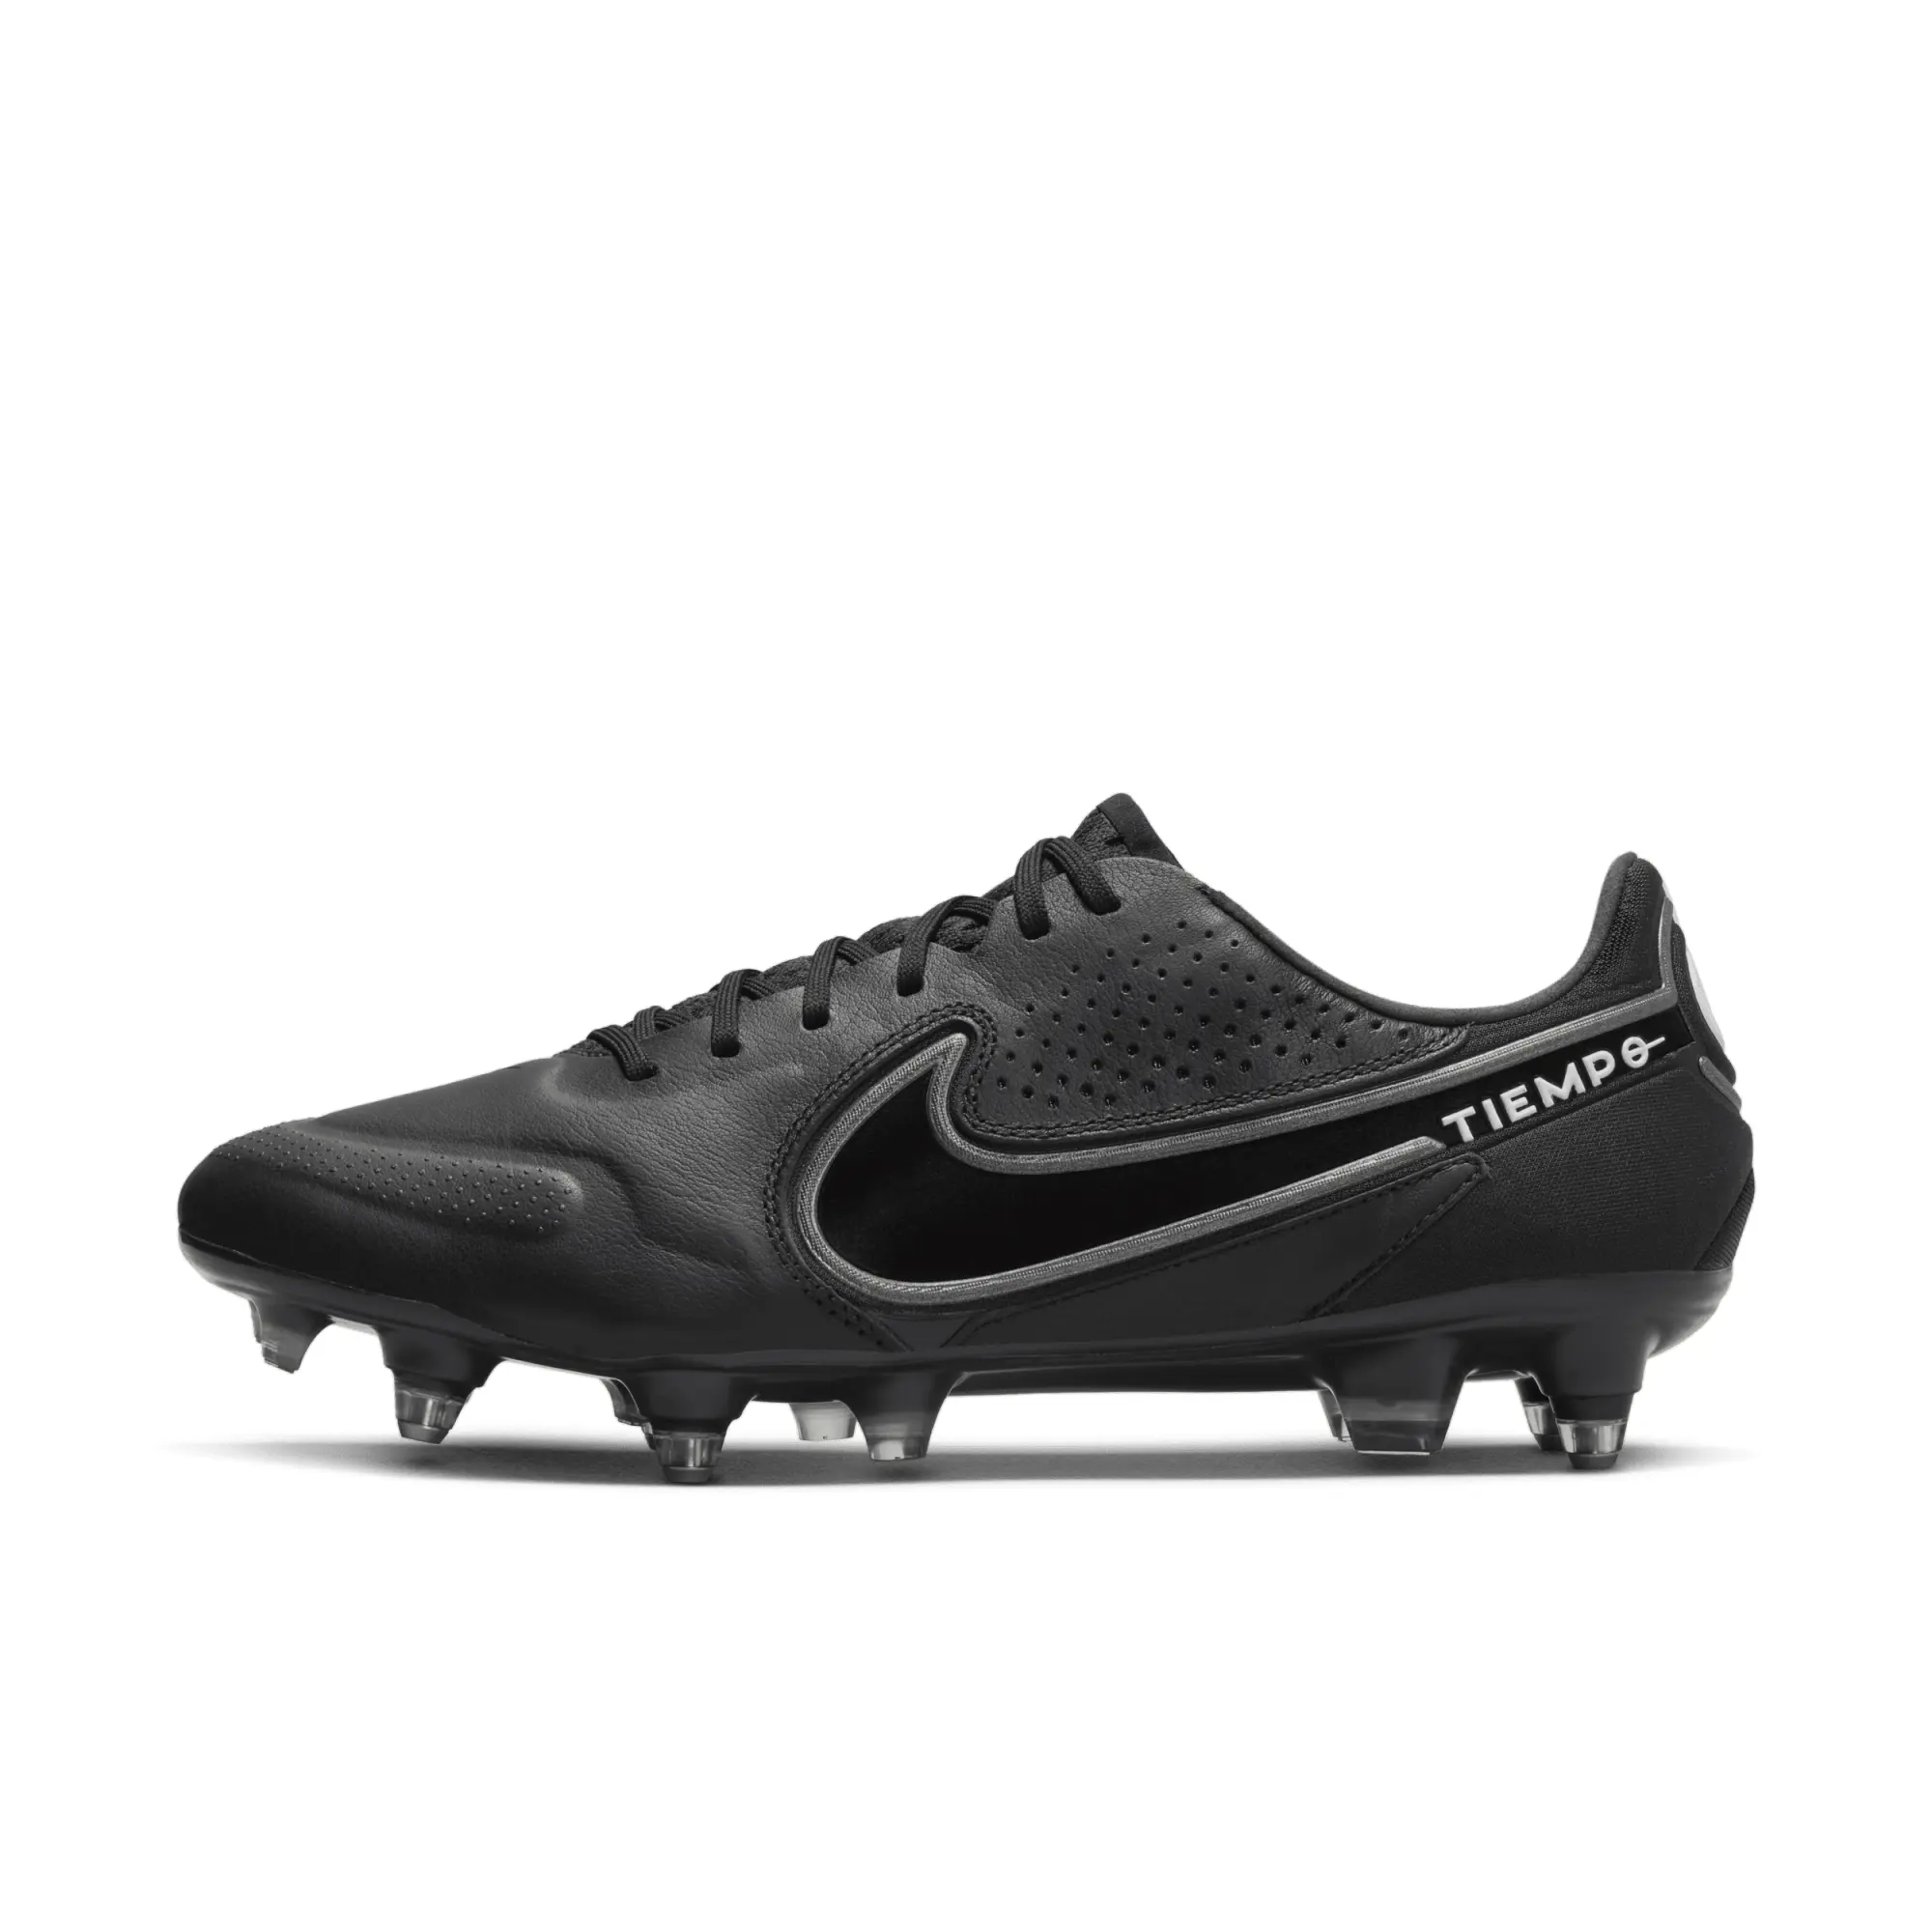 Nike Tiempo Elite SG Football Boots - Black